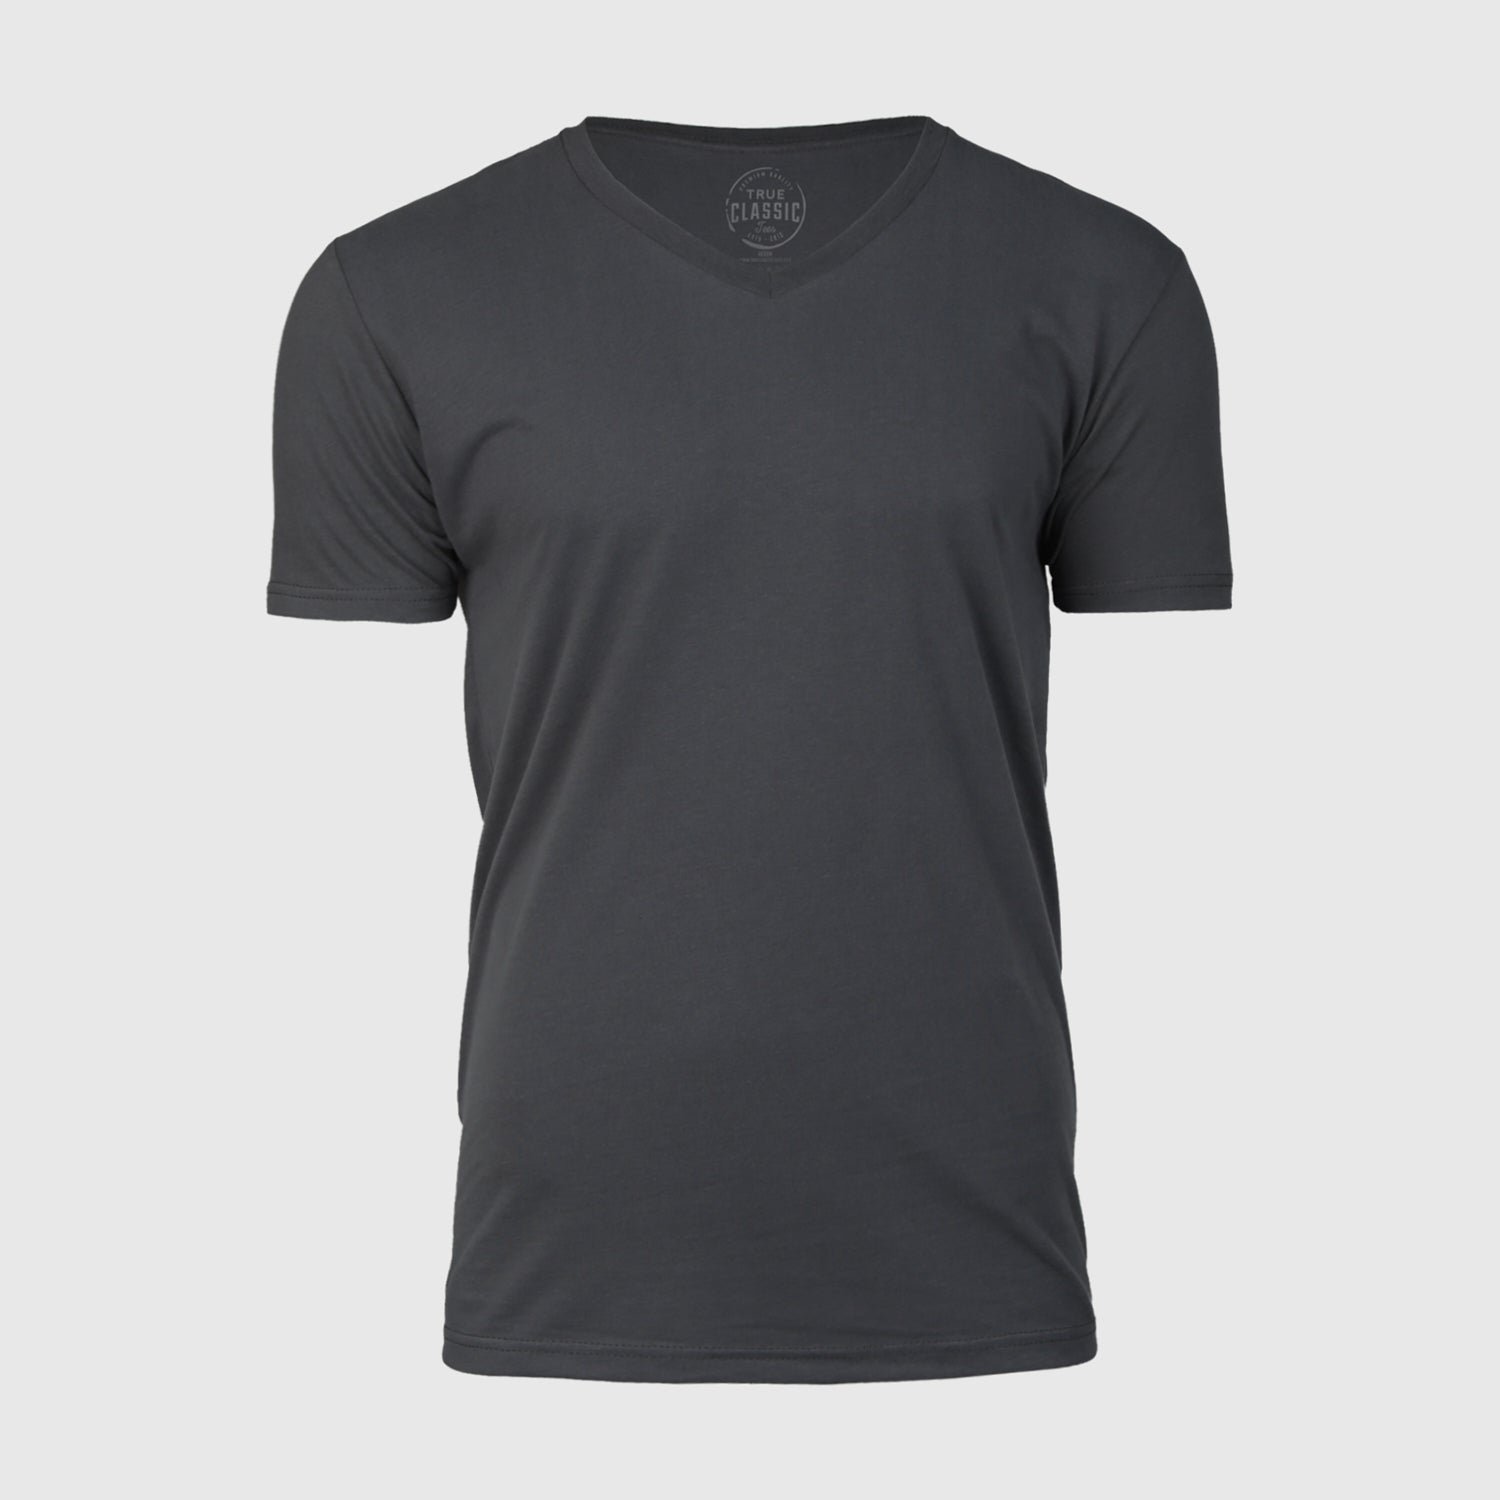 Carbon V-Neck T-Shirt